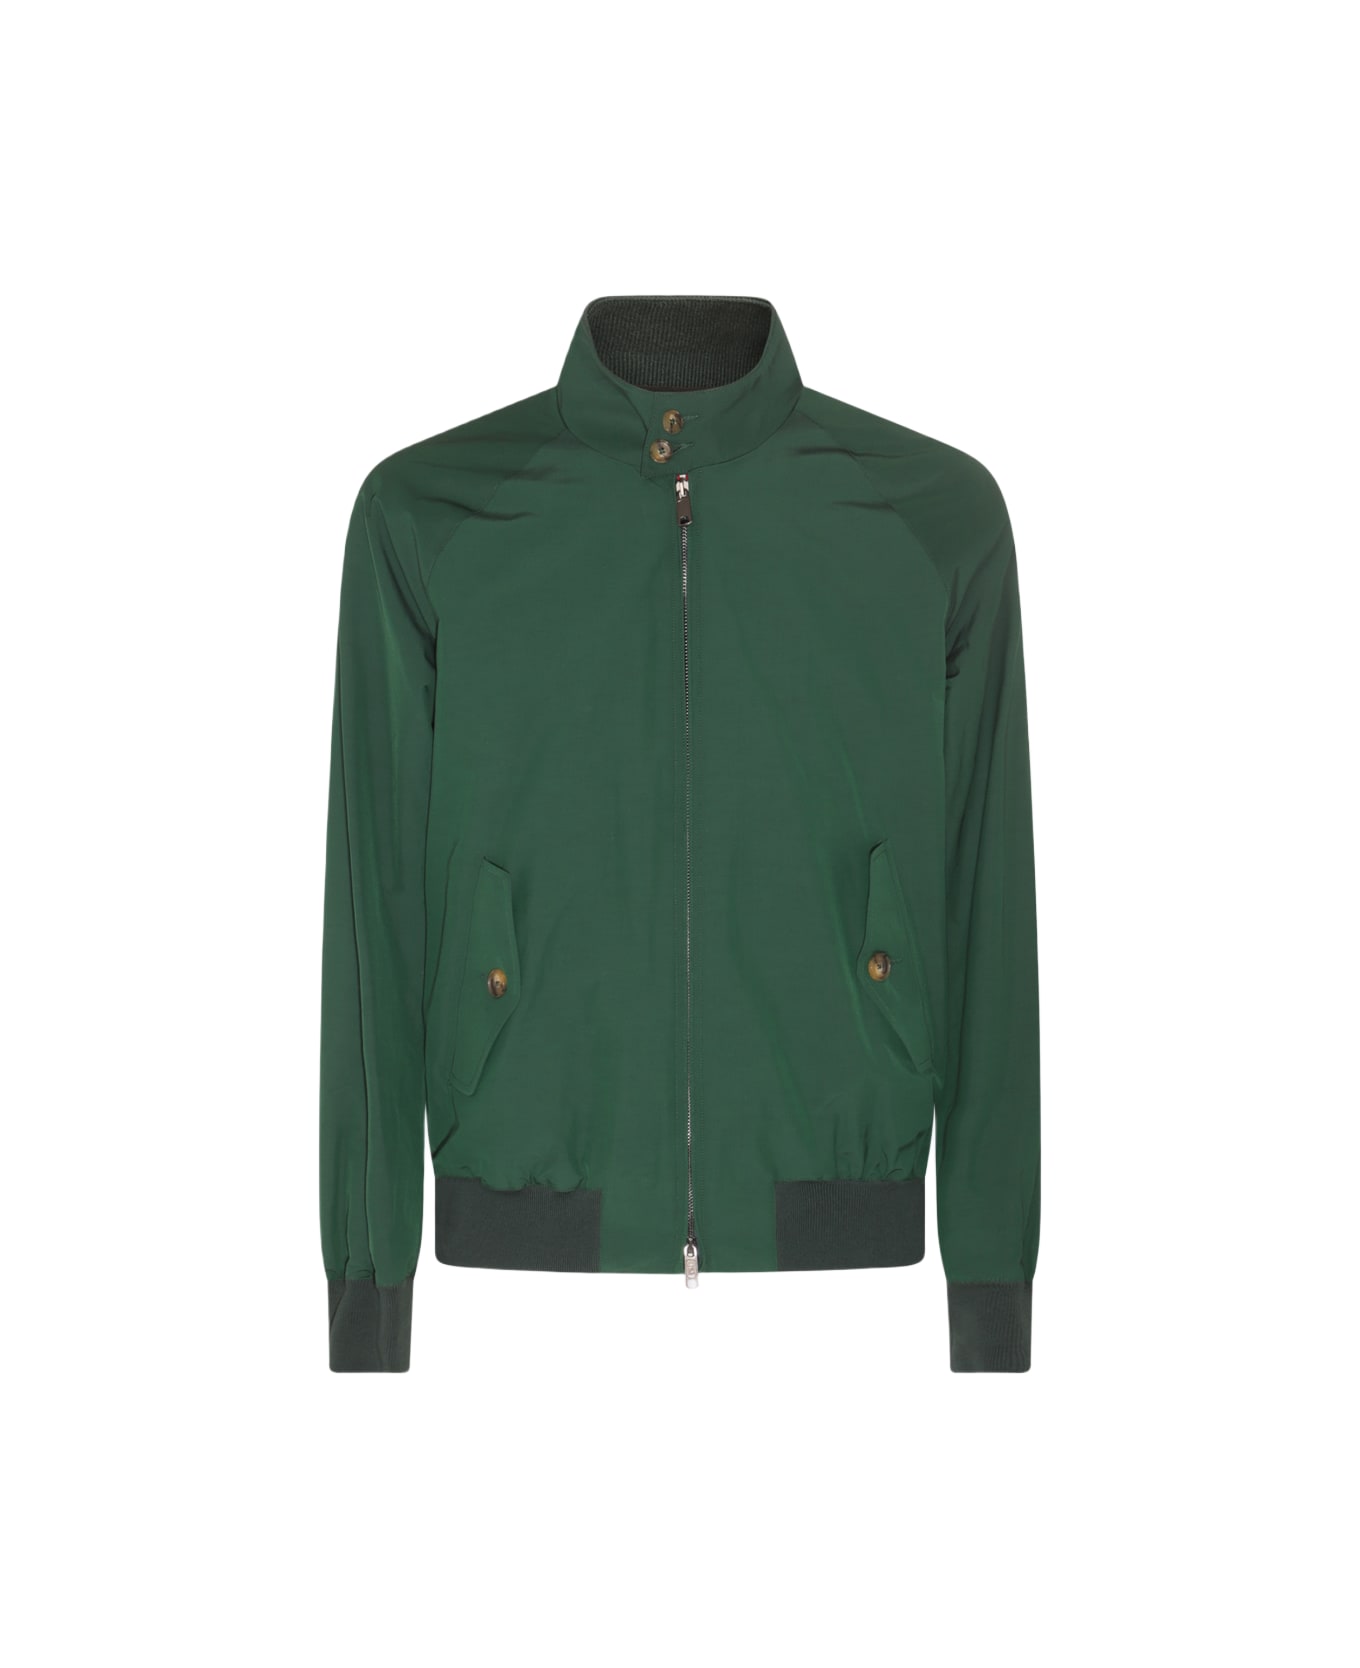 Baracuta Green Cotton Blend Casual Jacket - Racing green ジャケット